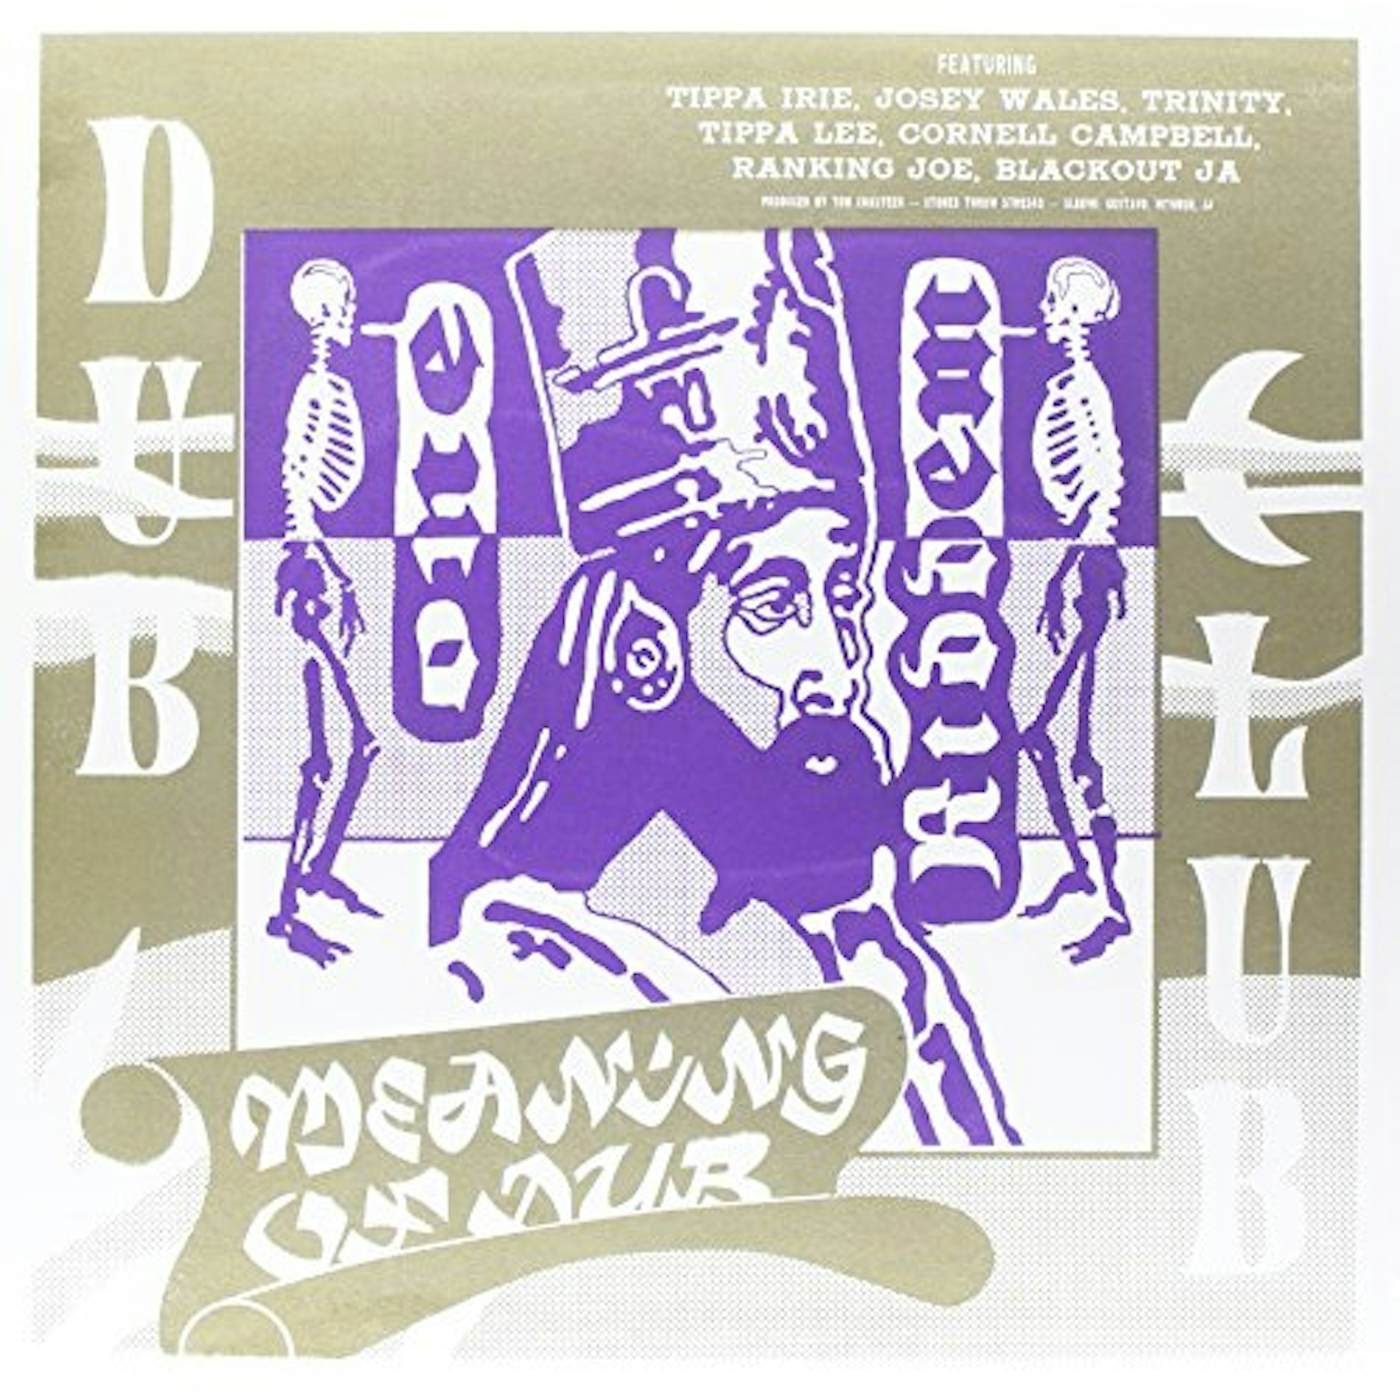 Dub Club Meaning of Dub Vinyl Record